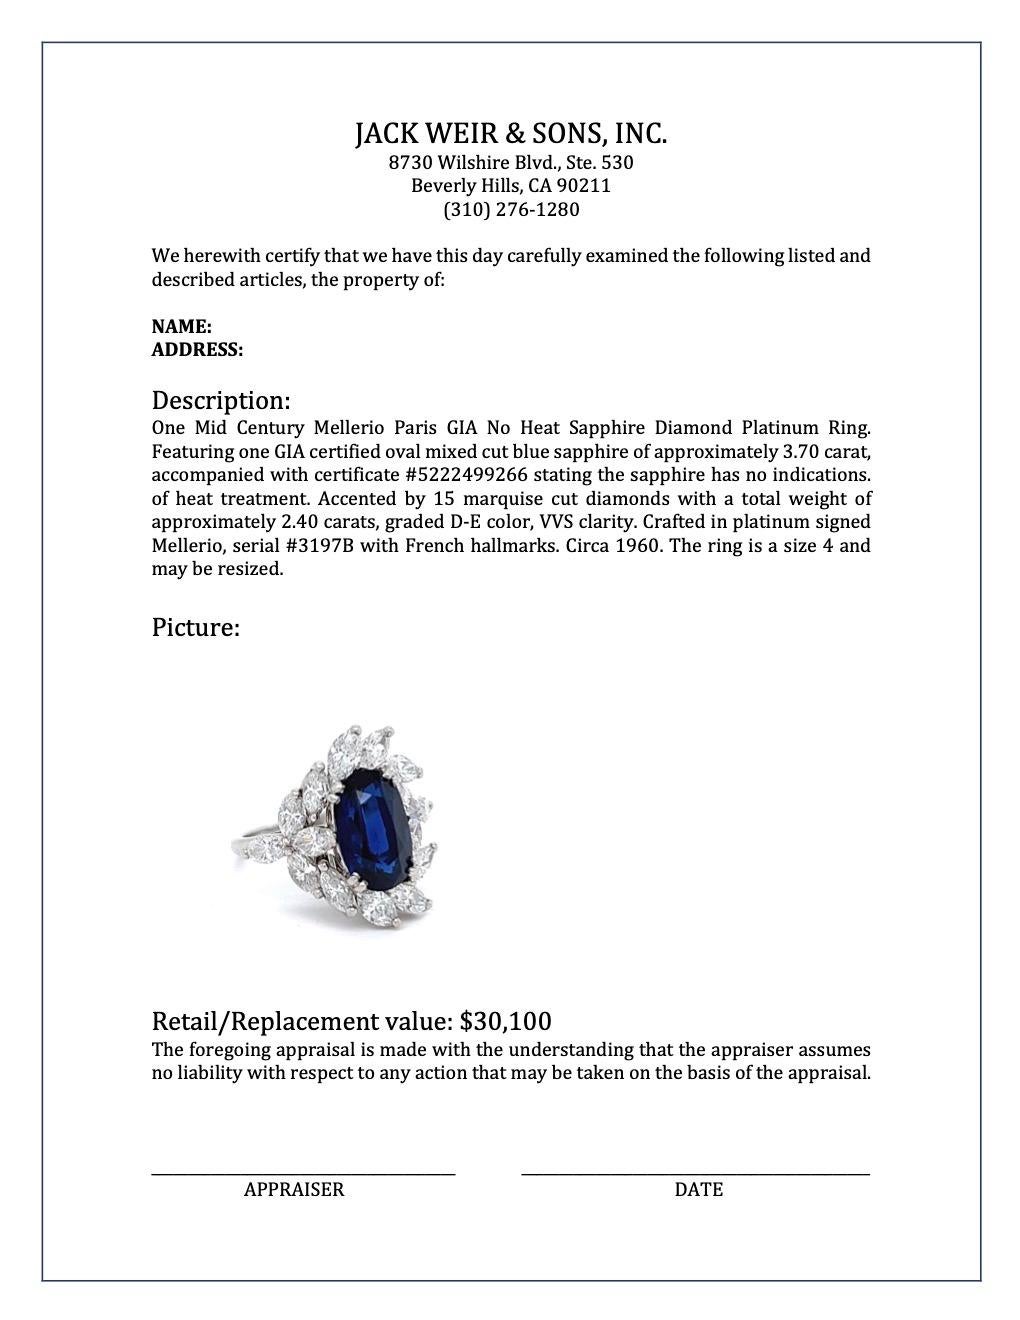 Mid Century Mellerio Paris GIA No Heat Sapphire Diamond Platinum Ring 4